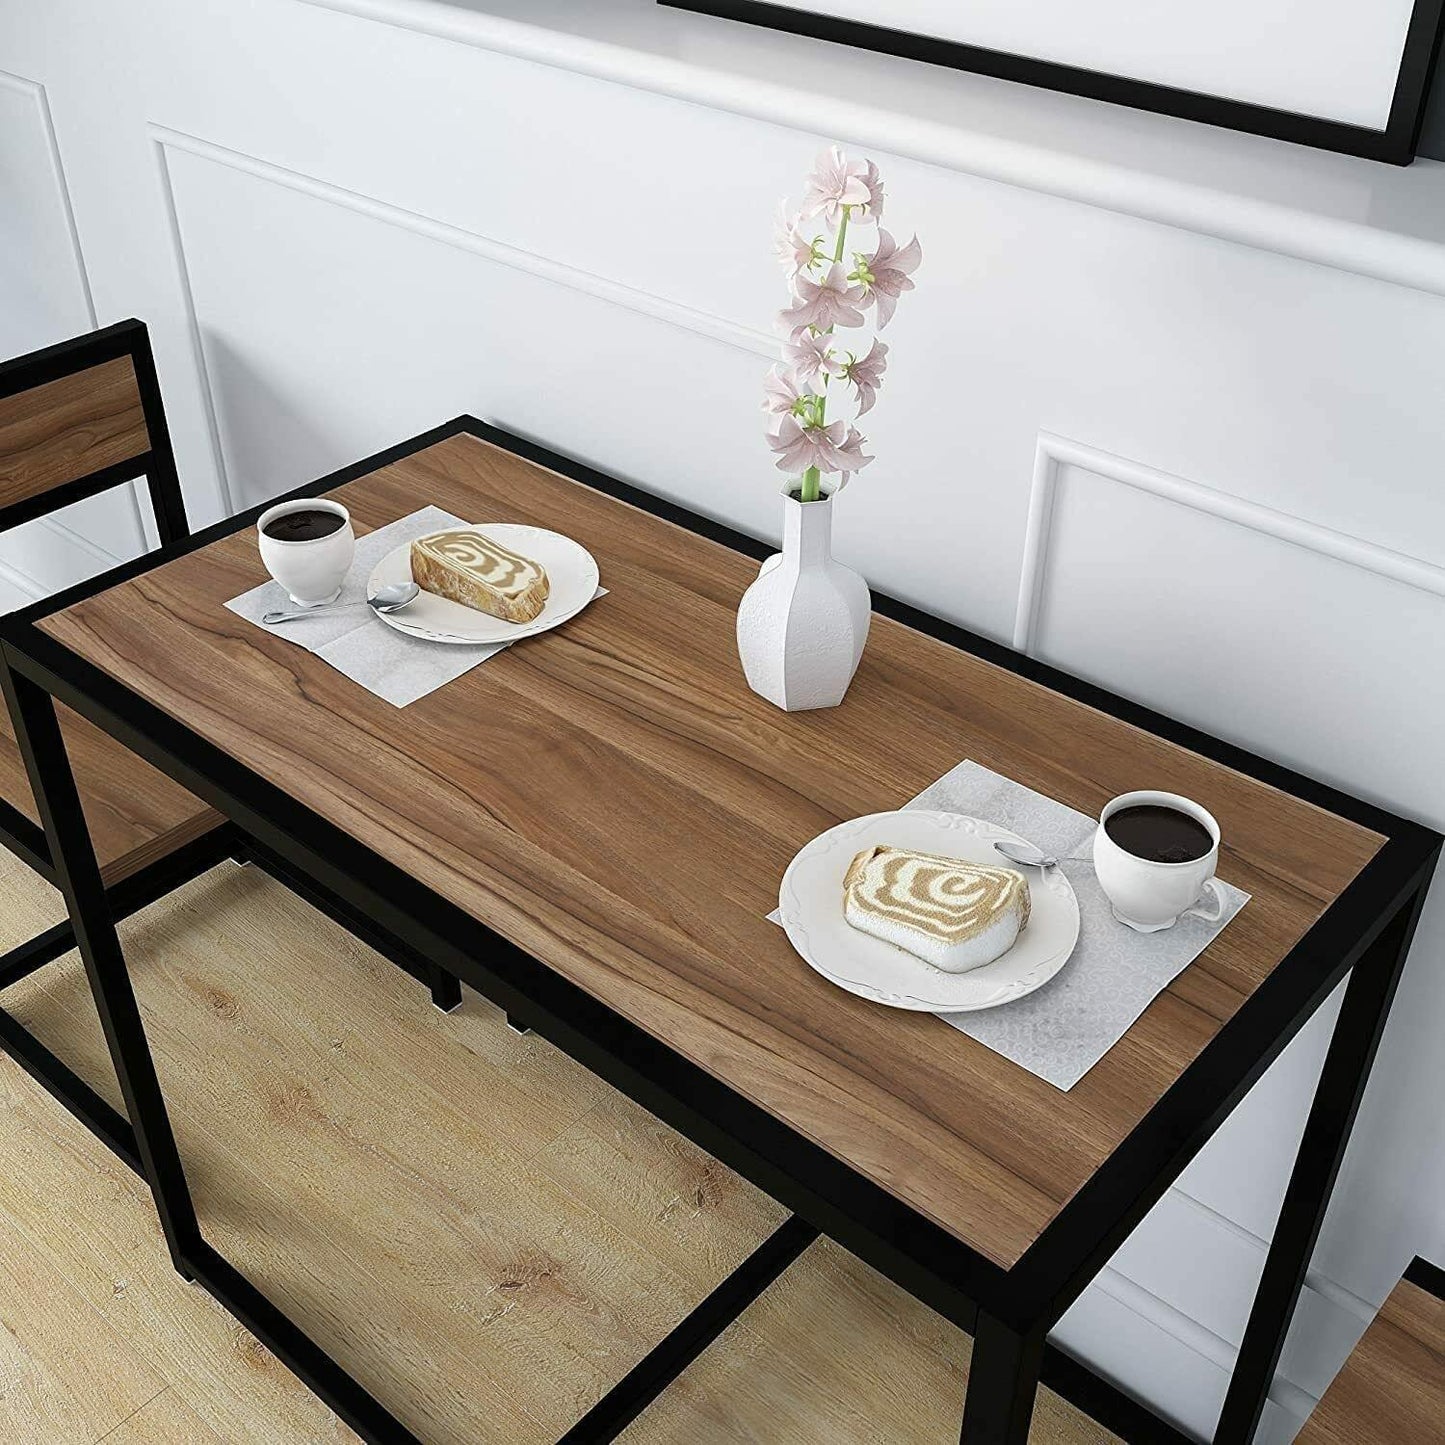 3 Pcs Industrial Walnut Wood/Metal Steel Dining Room Dinette Breakfast Kitchen Table & Chair Set HYGRAD BUILT TO SURVIVE